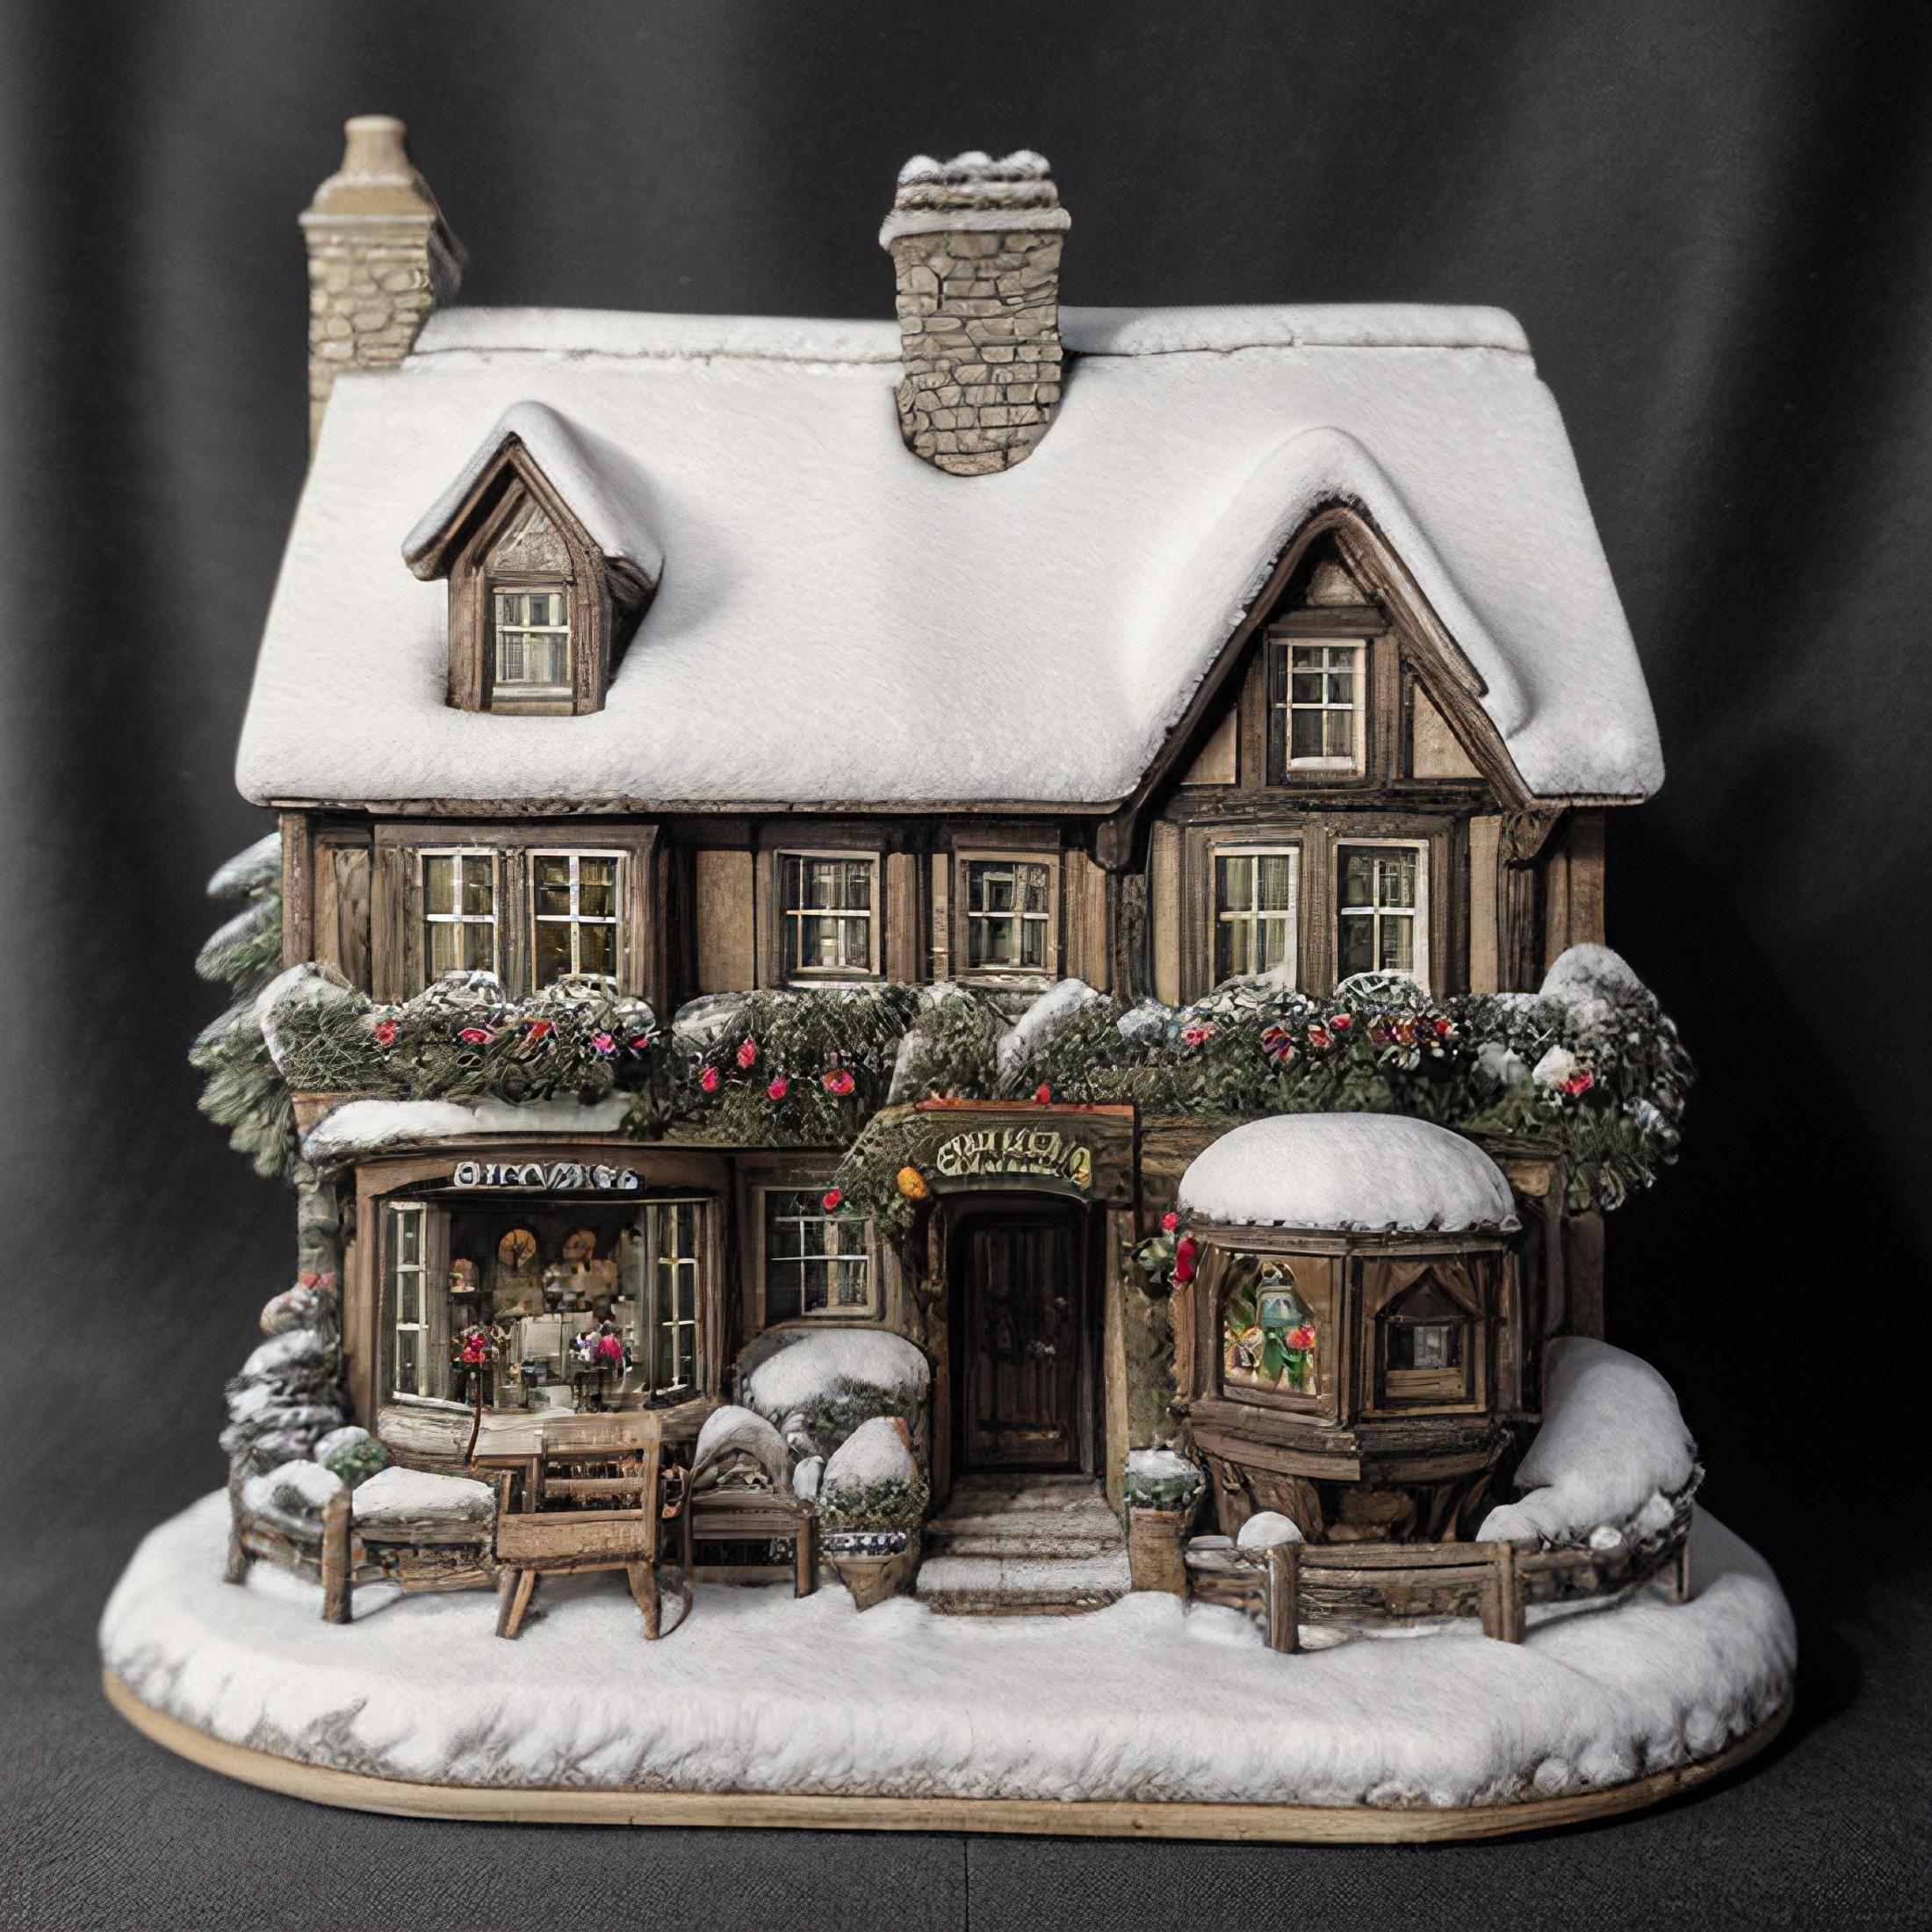 Miniature Houses image by Signalytix